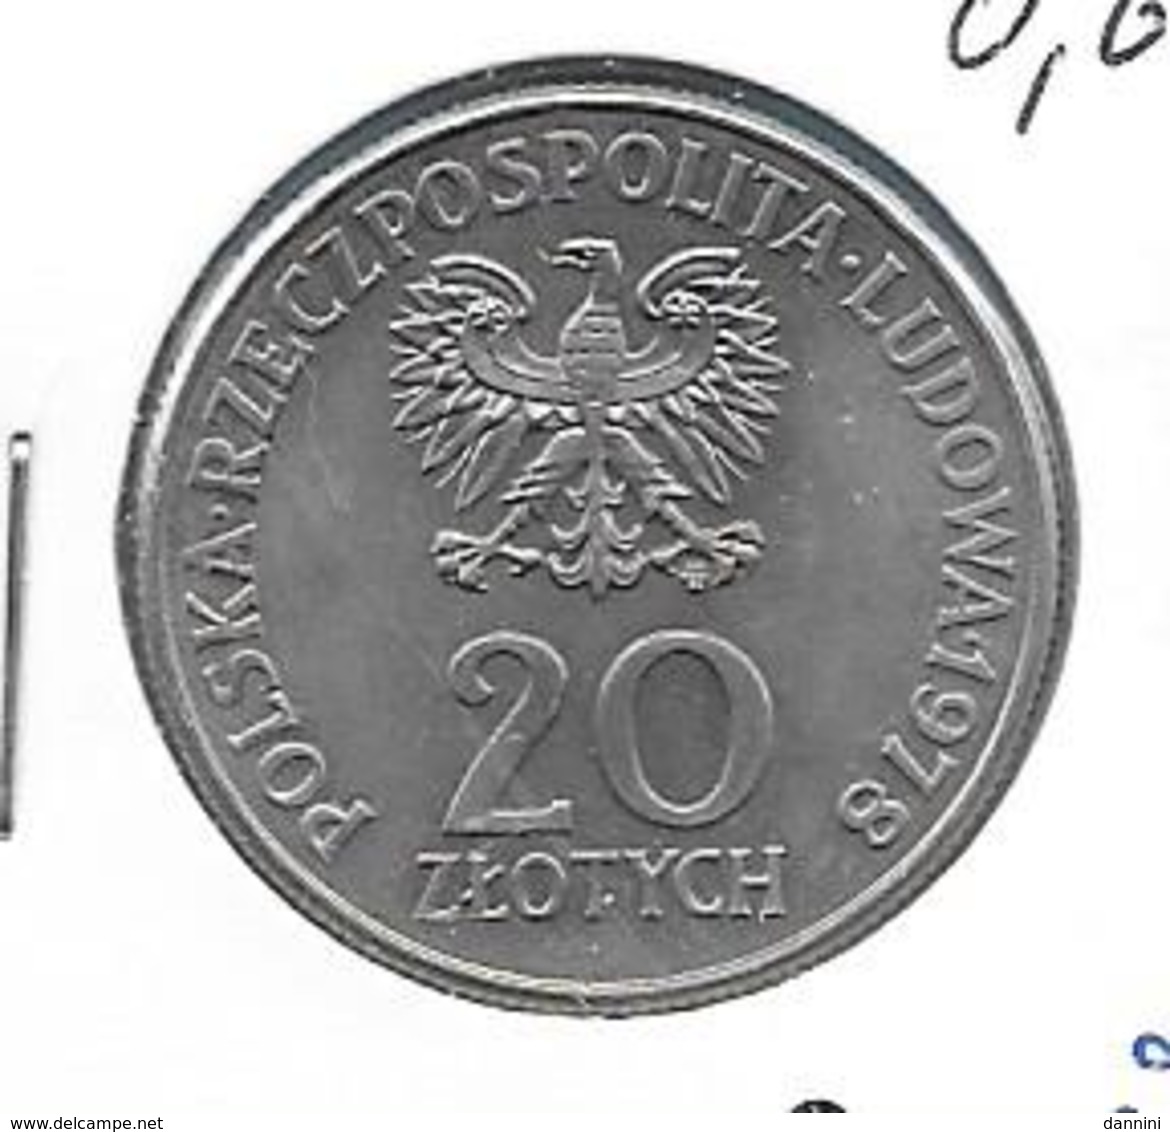 Polen 20 Zloty 1978 - KM 97 - Pologne